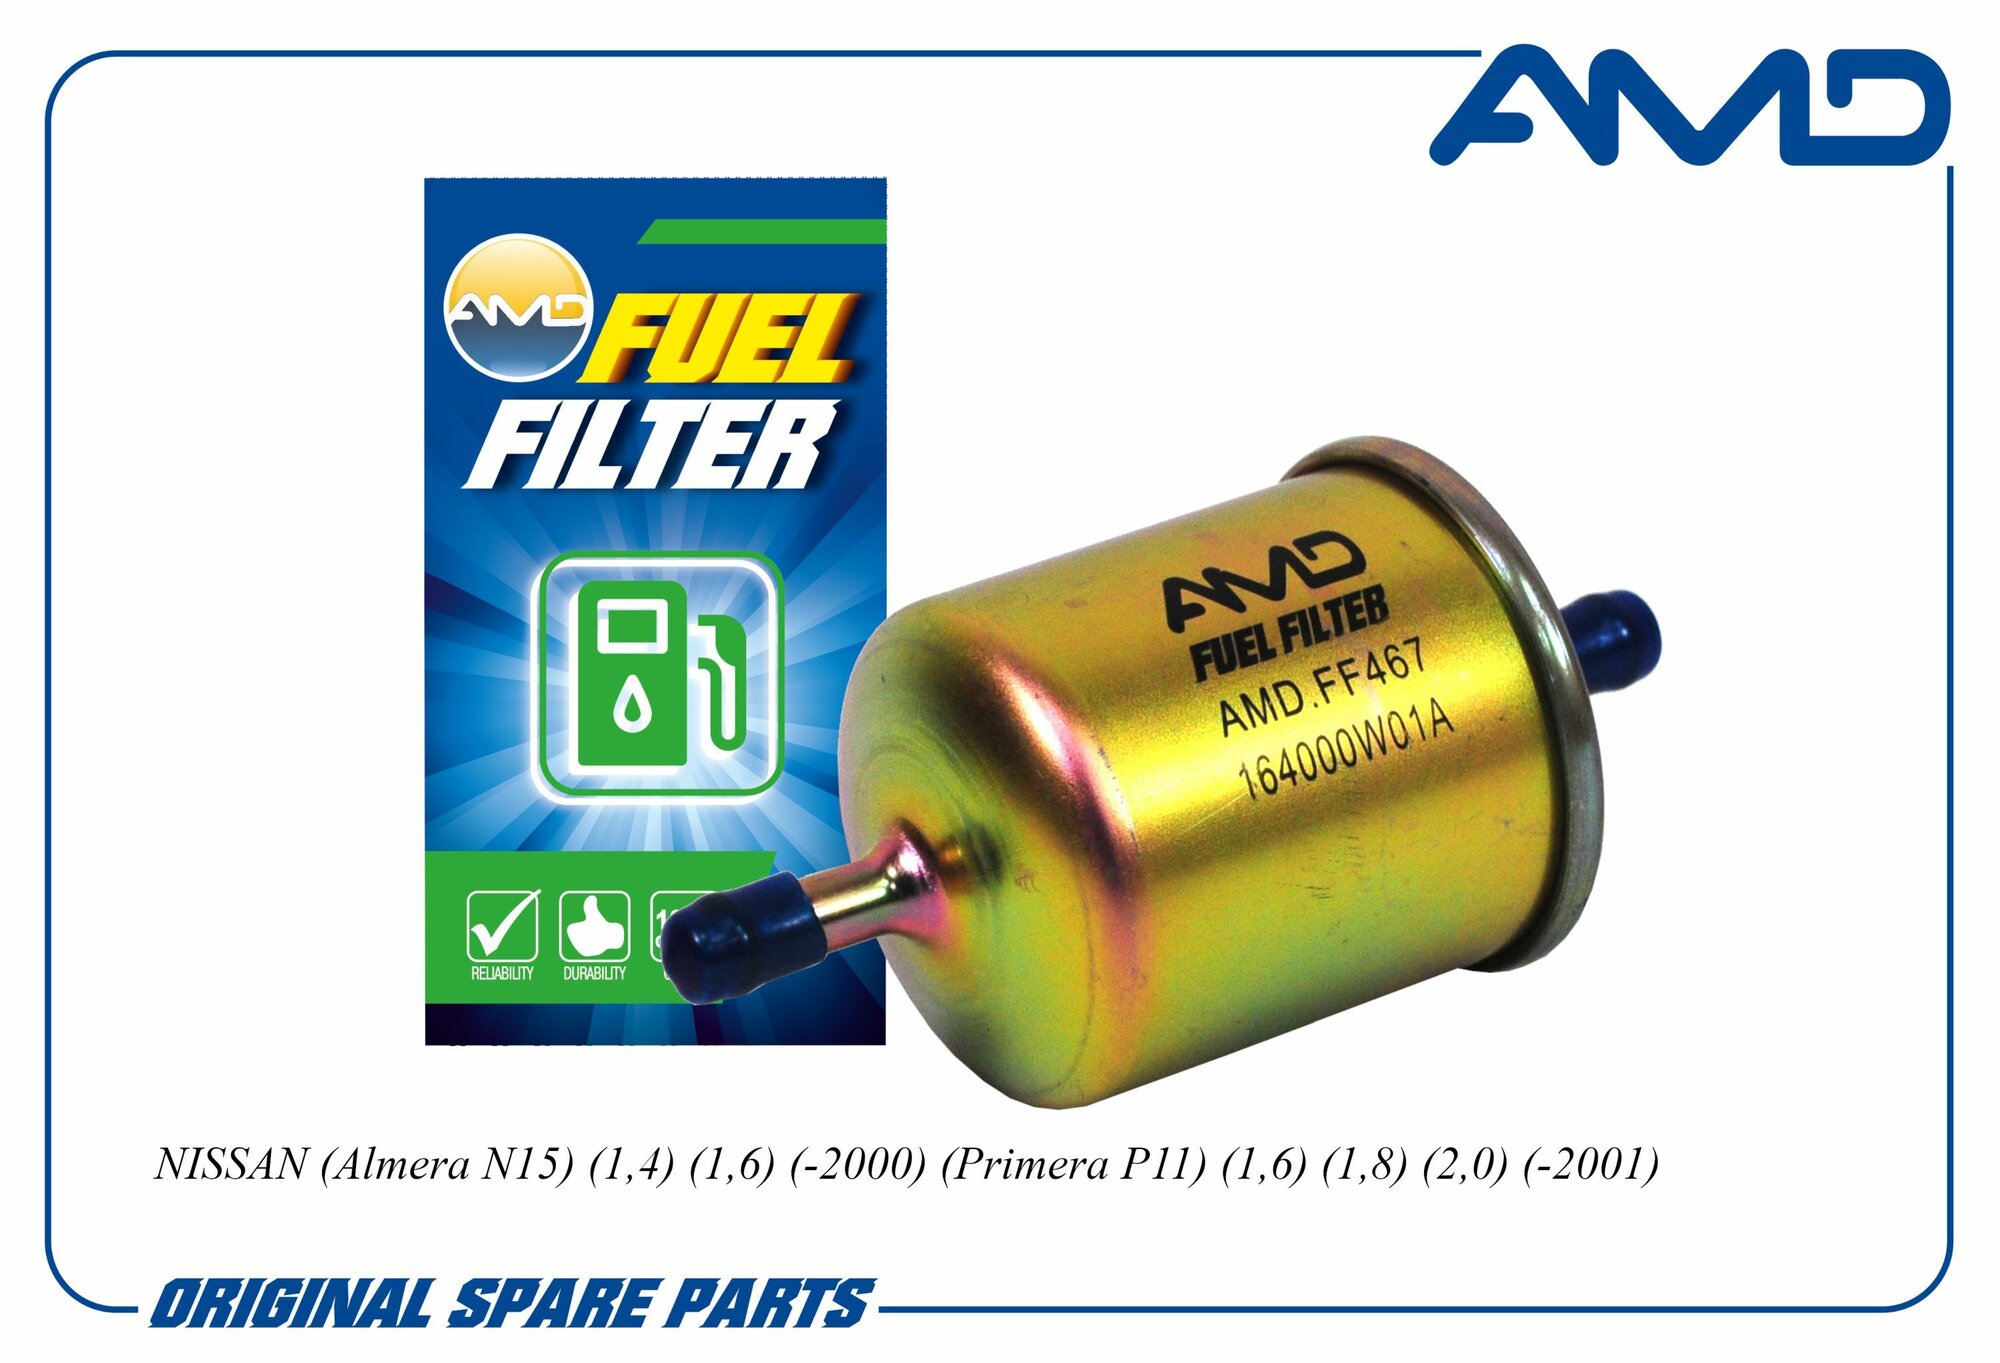 Фильтр топливный 16400-0W01A/AMD. FF467 для NISSAN Almera N15 14 16 -2000 Primera P11 16 18 20 -2001